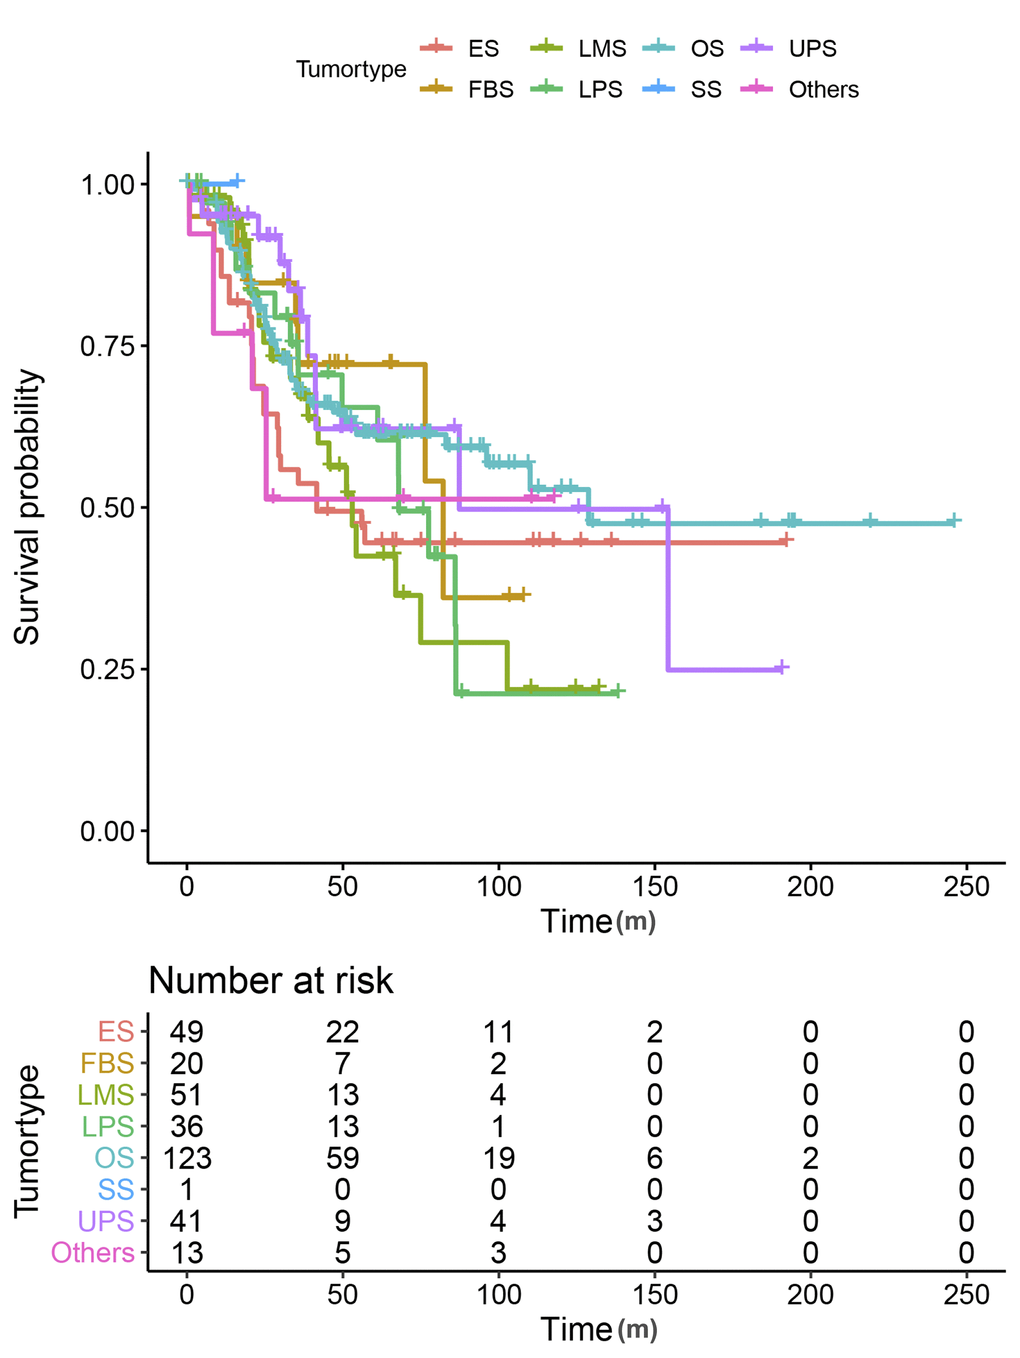 Kaplan-Meier curves for overall survival by tumor types.